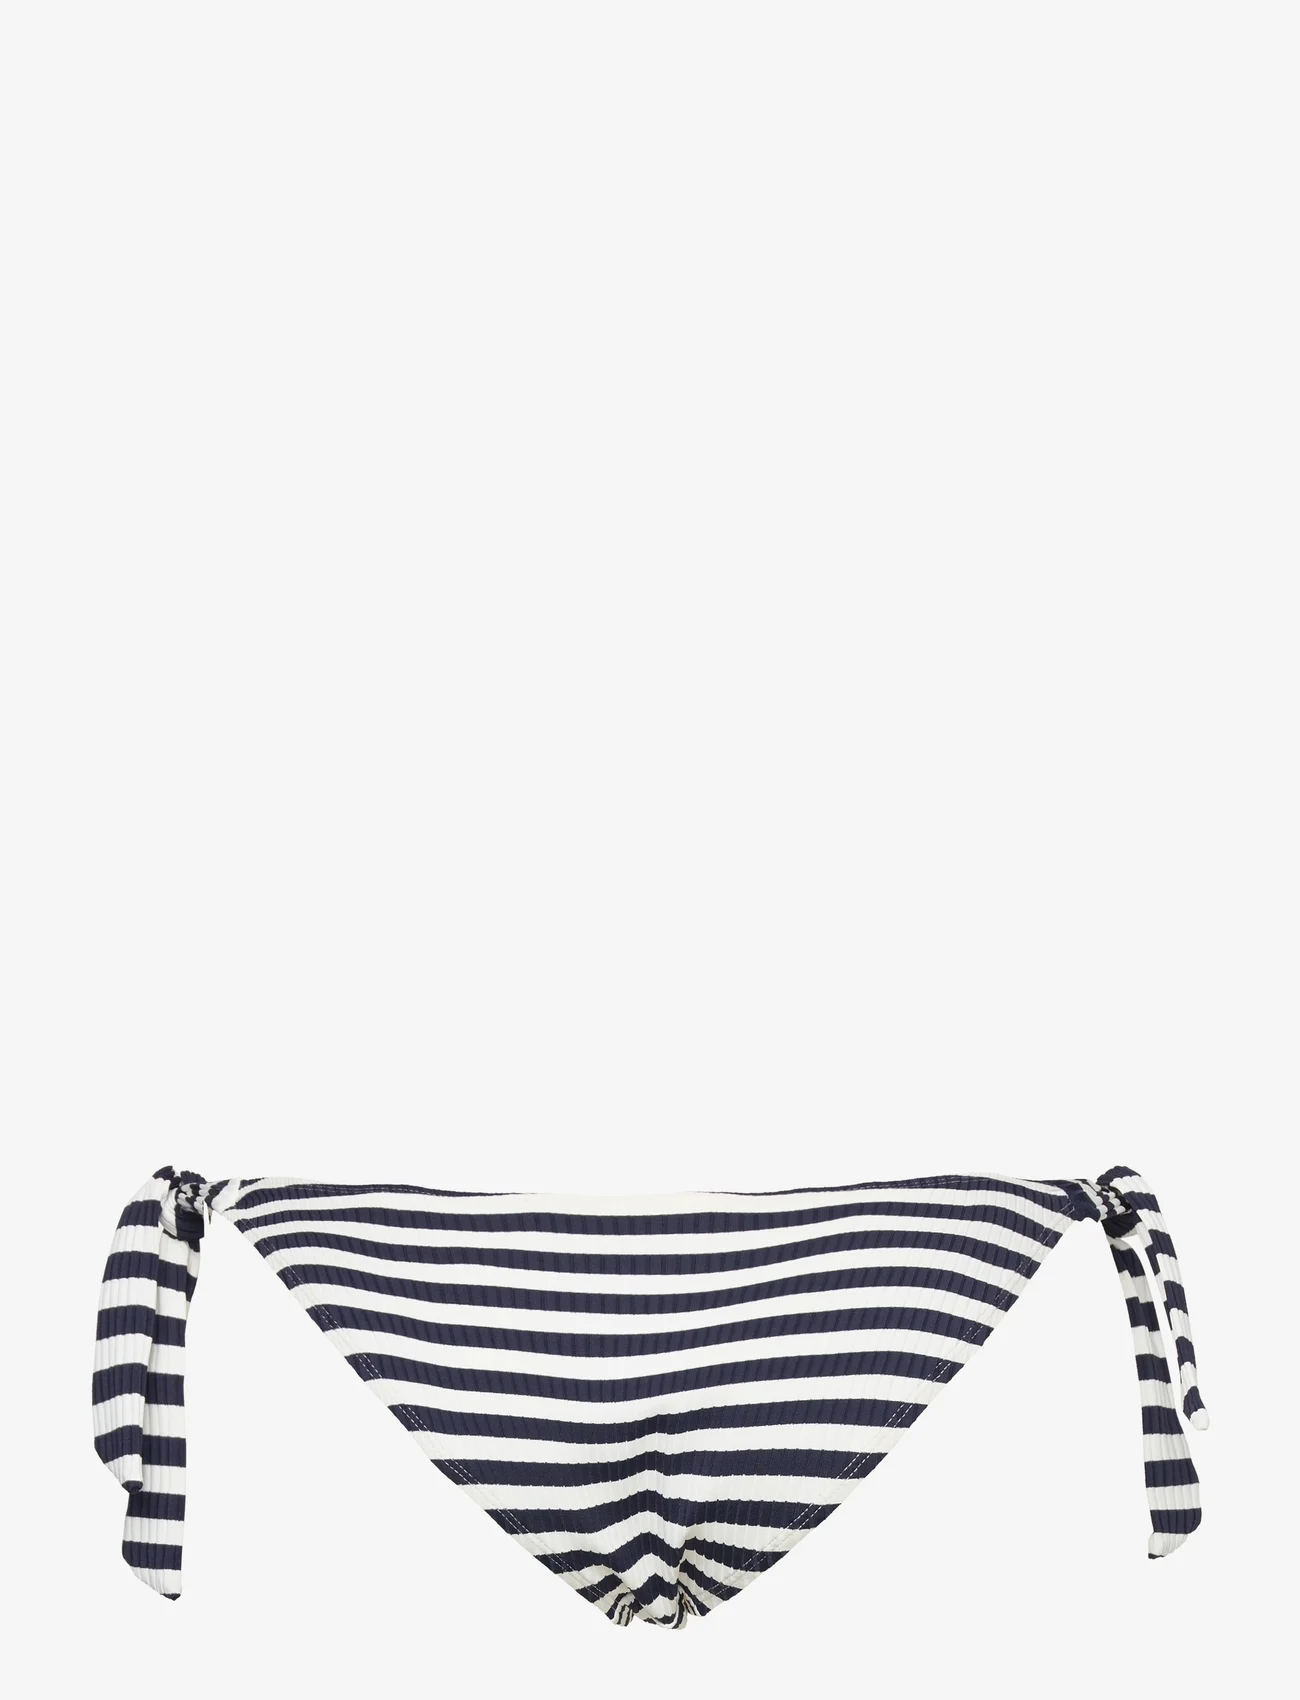 Panos Emporio - NAUTIC ILIANA BOTTOM - bikinis mit seitenbändern - navy/white - 1